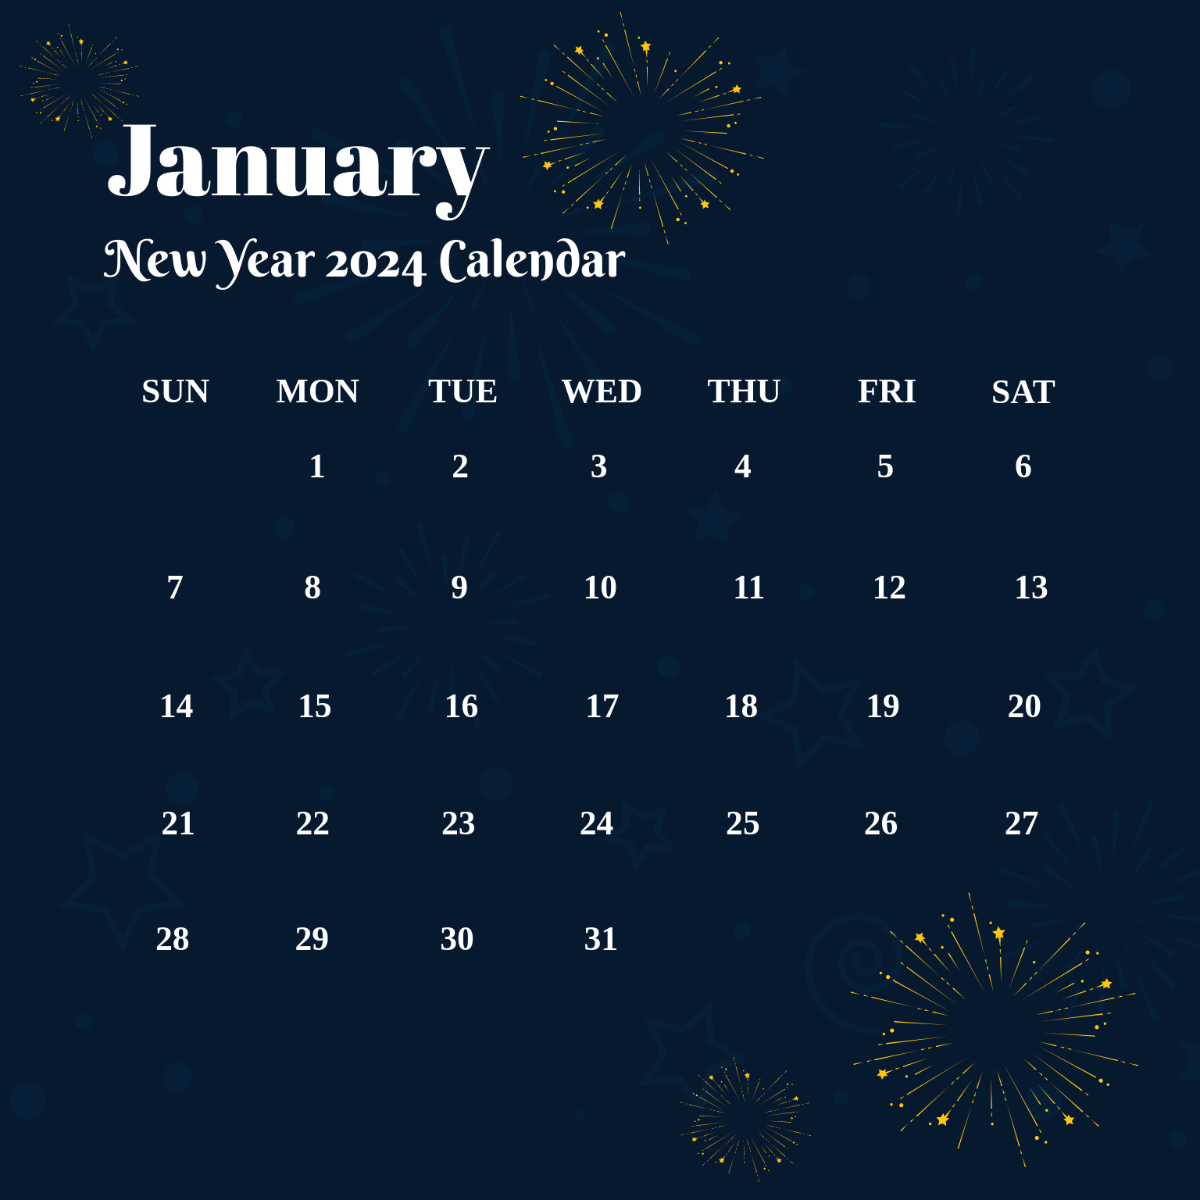 New Year 2024 Calendar Template